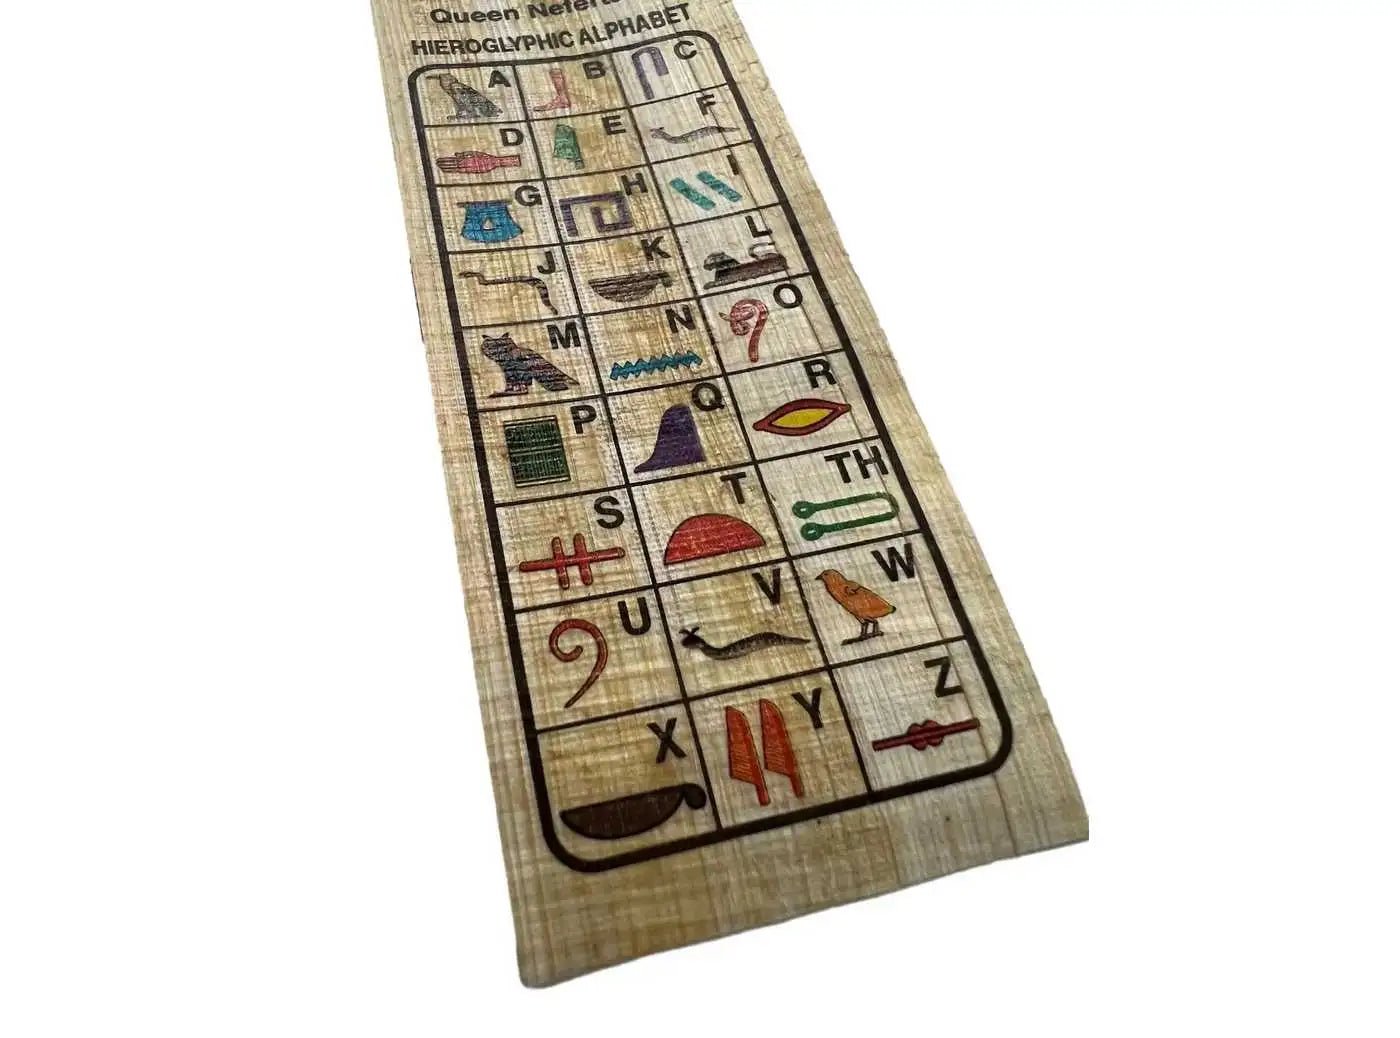 Hieroglyphs Paper - King Tut Ankh Amoun - Hieroglyphic Alphabet - Papyrus Bookmark History Educational